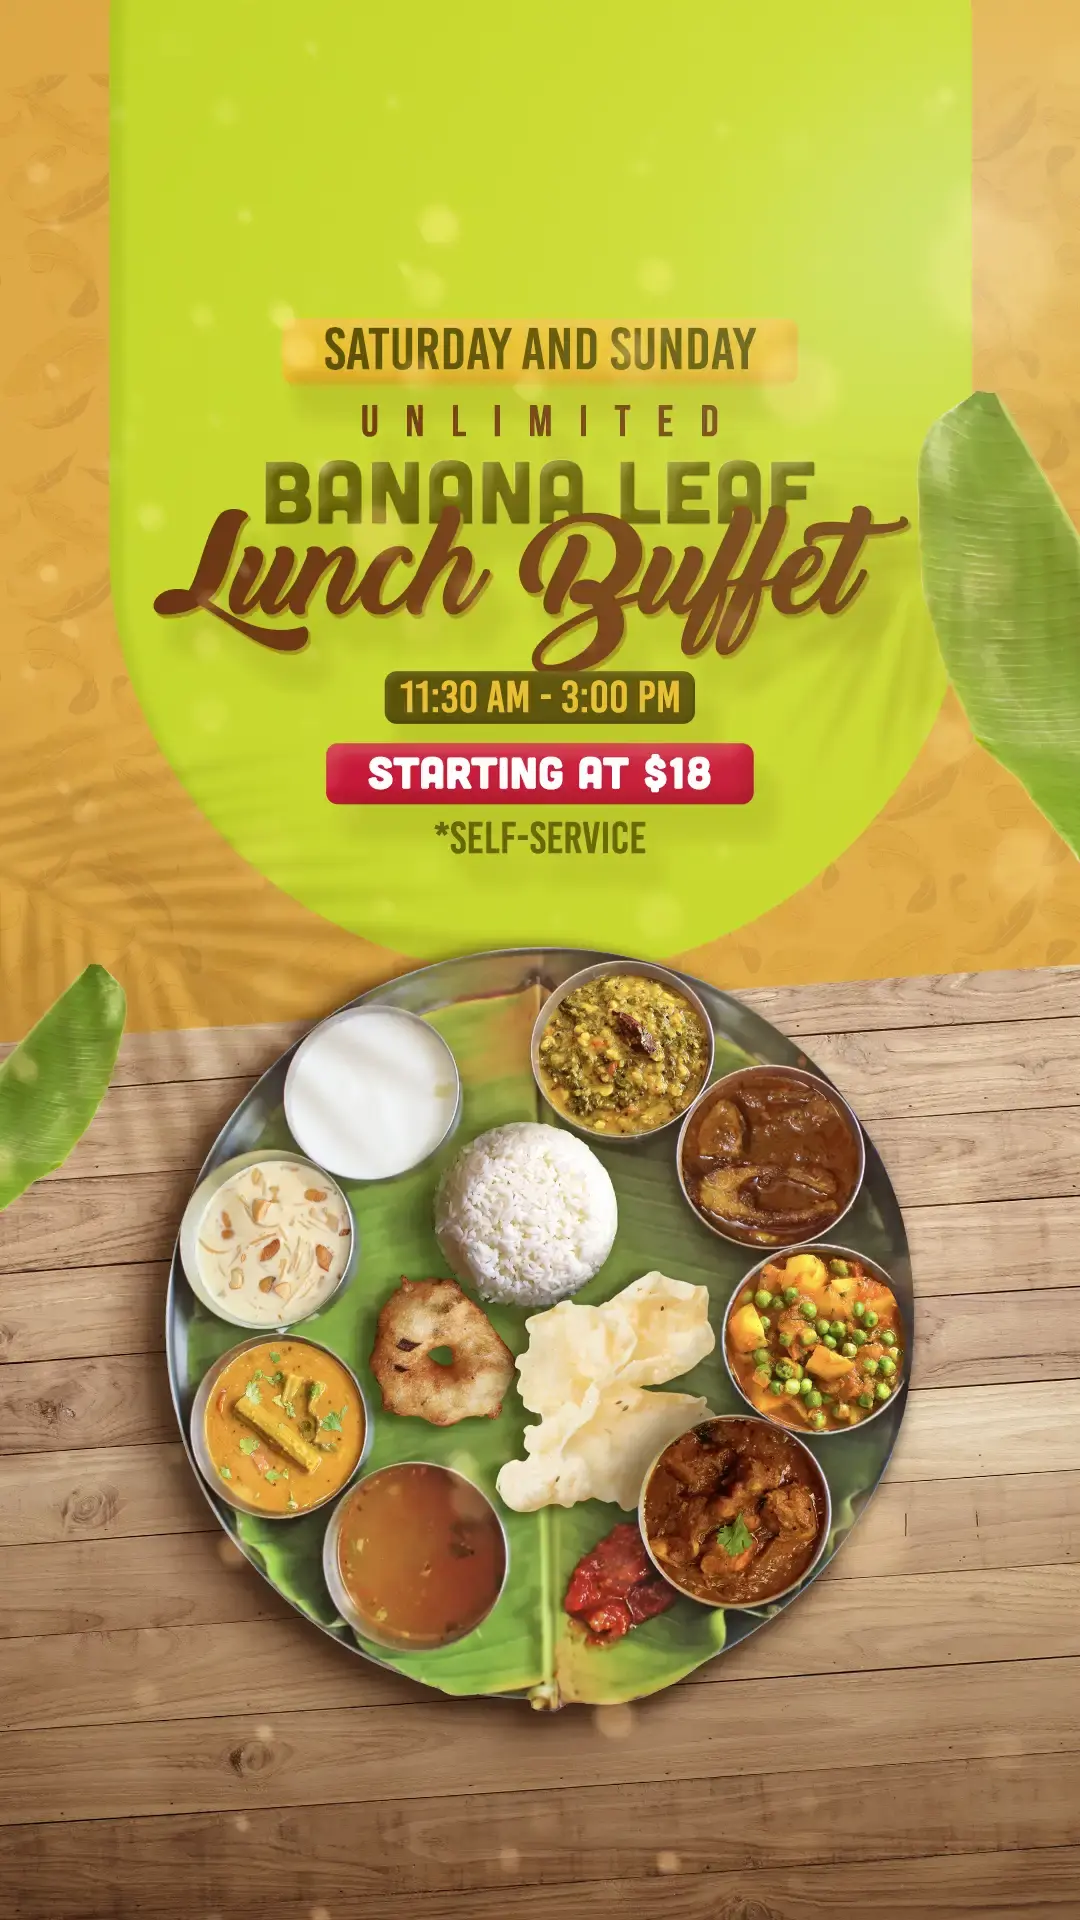 Home Slider2Banana leaf lunch buffet